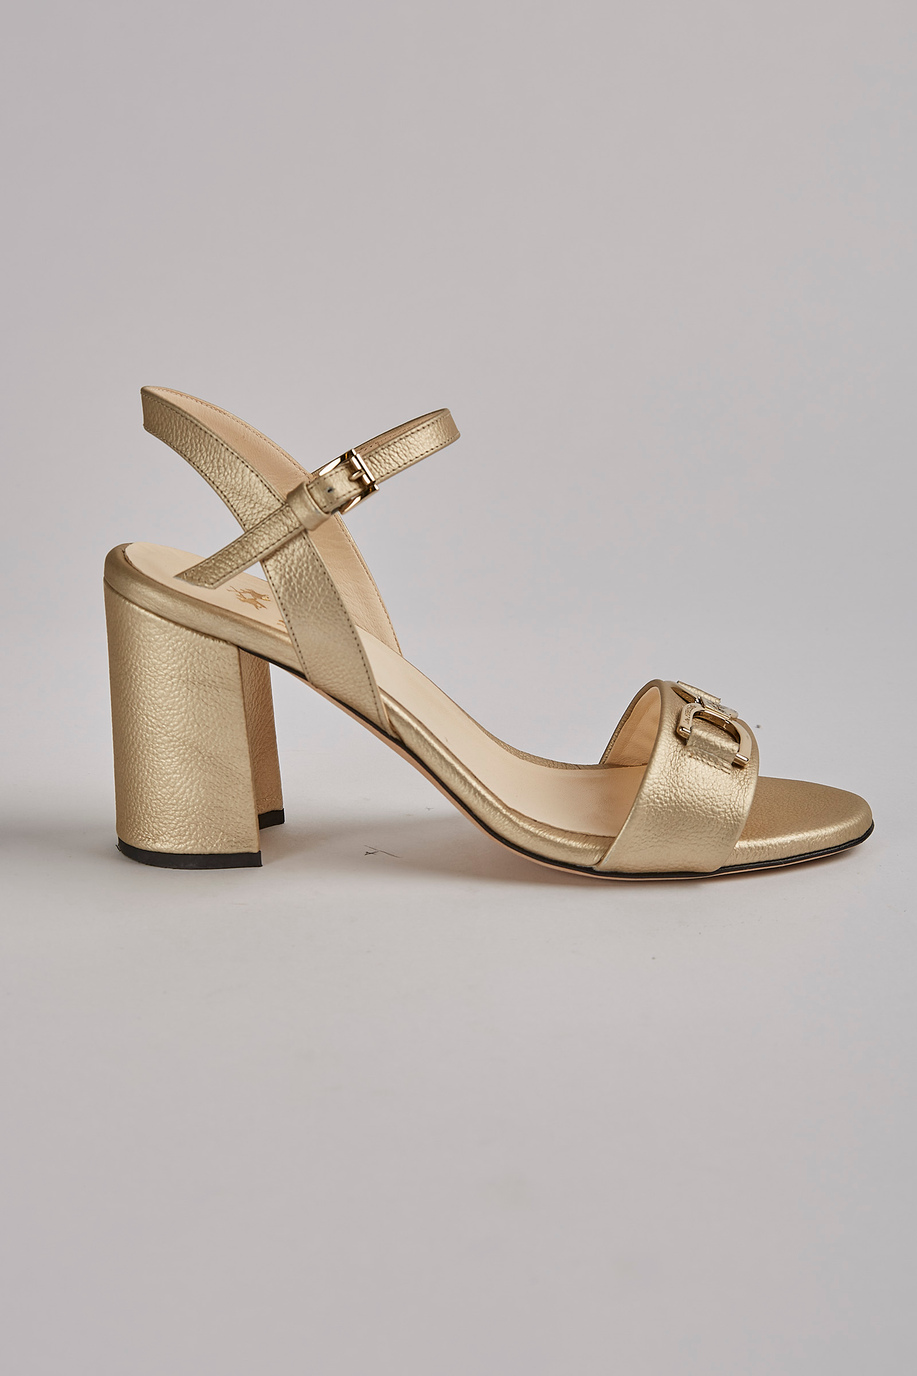 Sandalo in pelle - Scarpe donna | La Martina - Official Online Shop